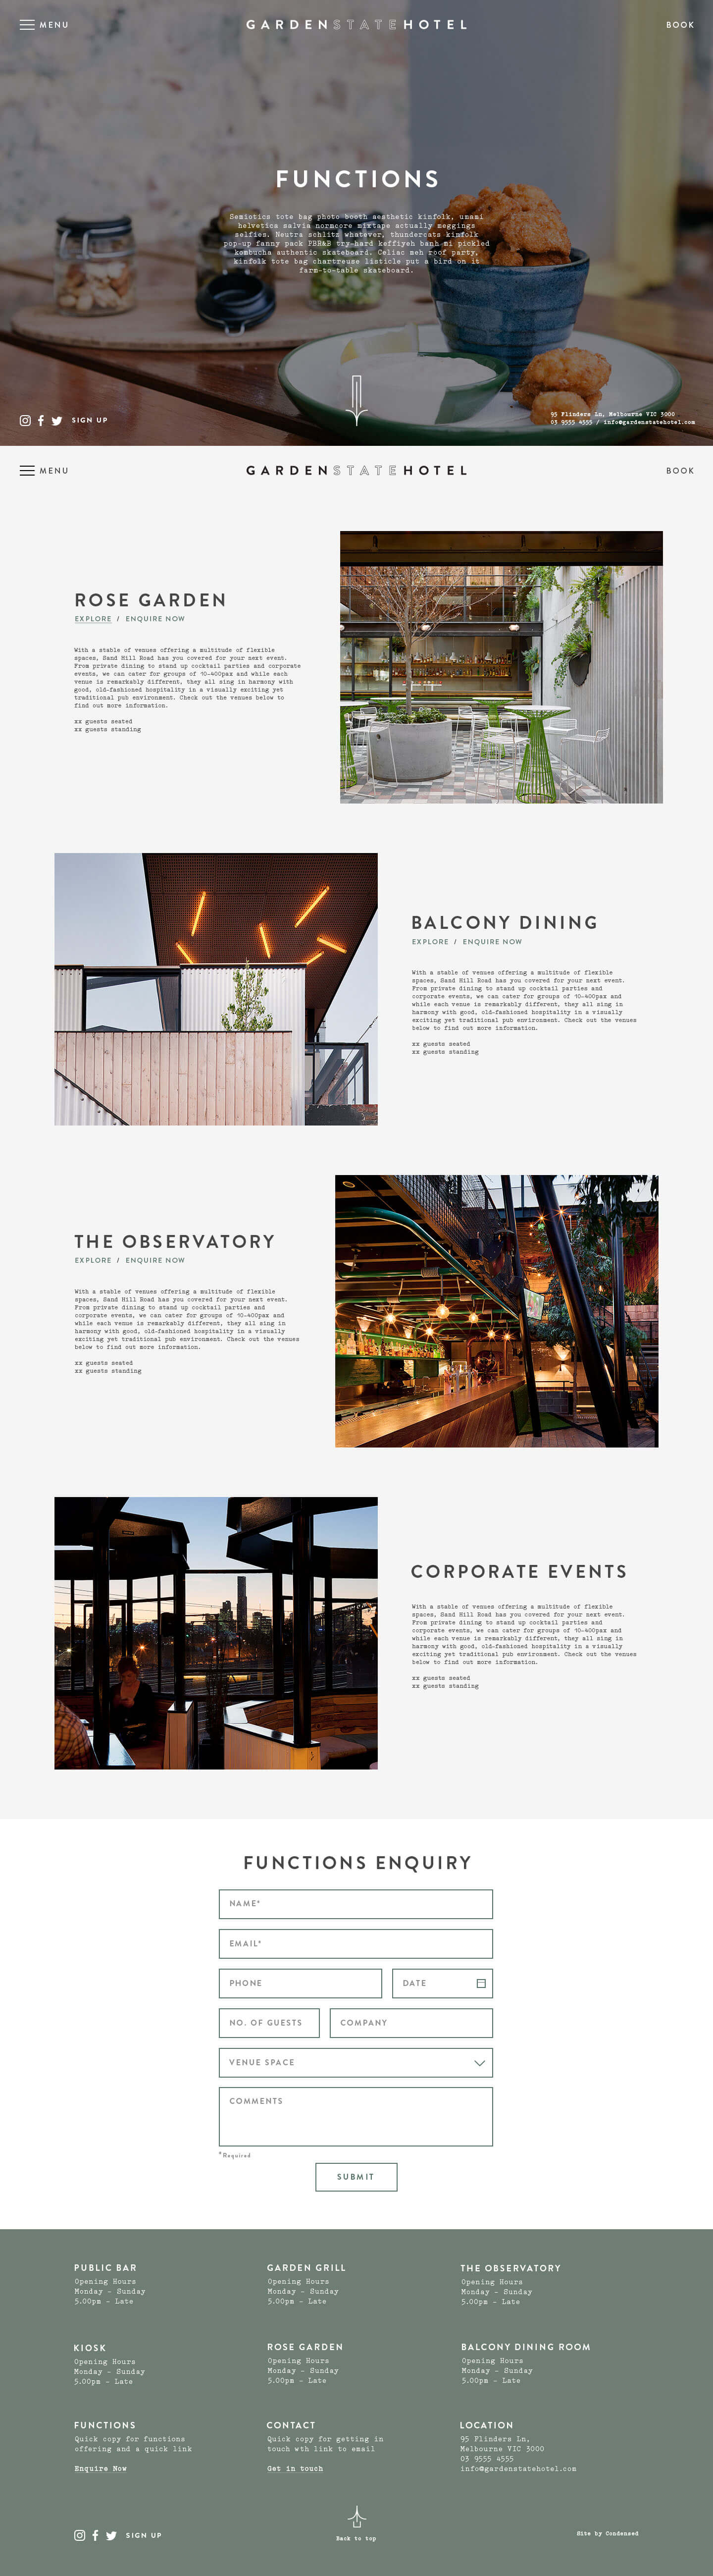 Garden State Hotel restaurant bar website UI design and custom wordpress front-end development